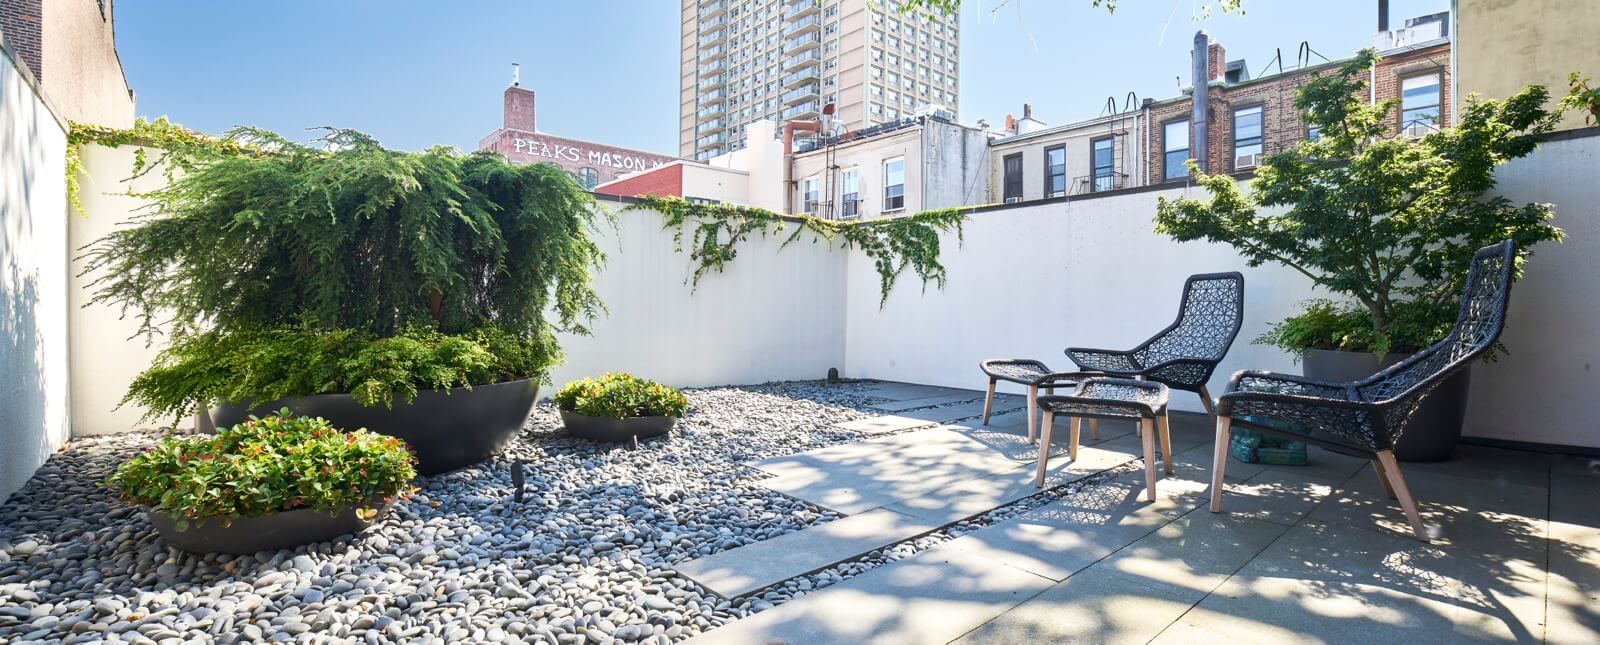 Garden Design Ideas Brooklyn Kim Hoyt Brooklyn Heights